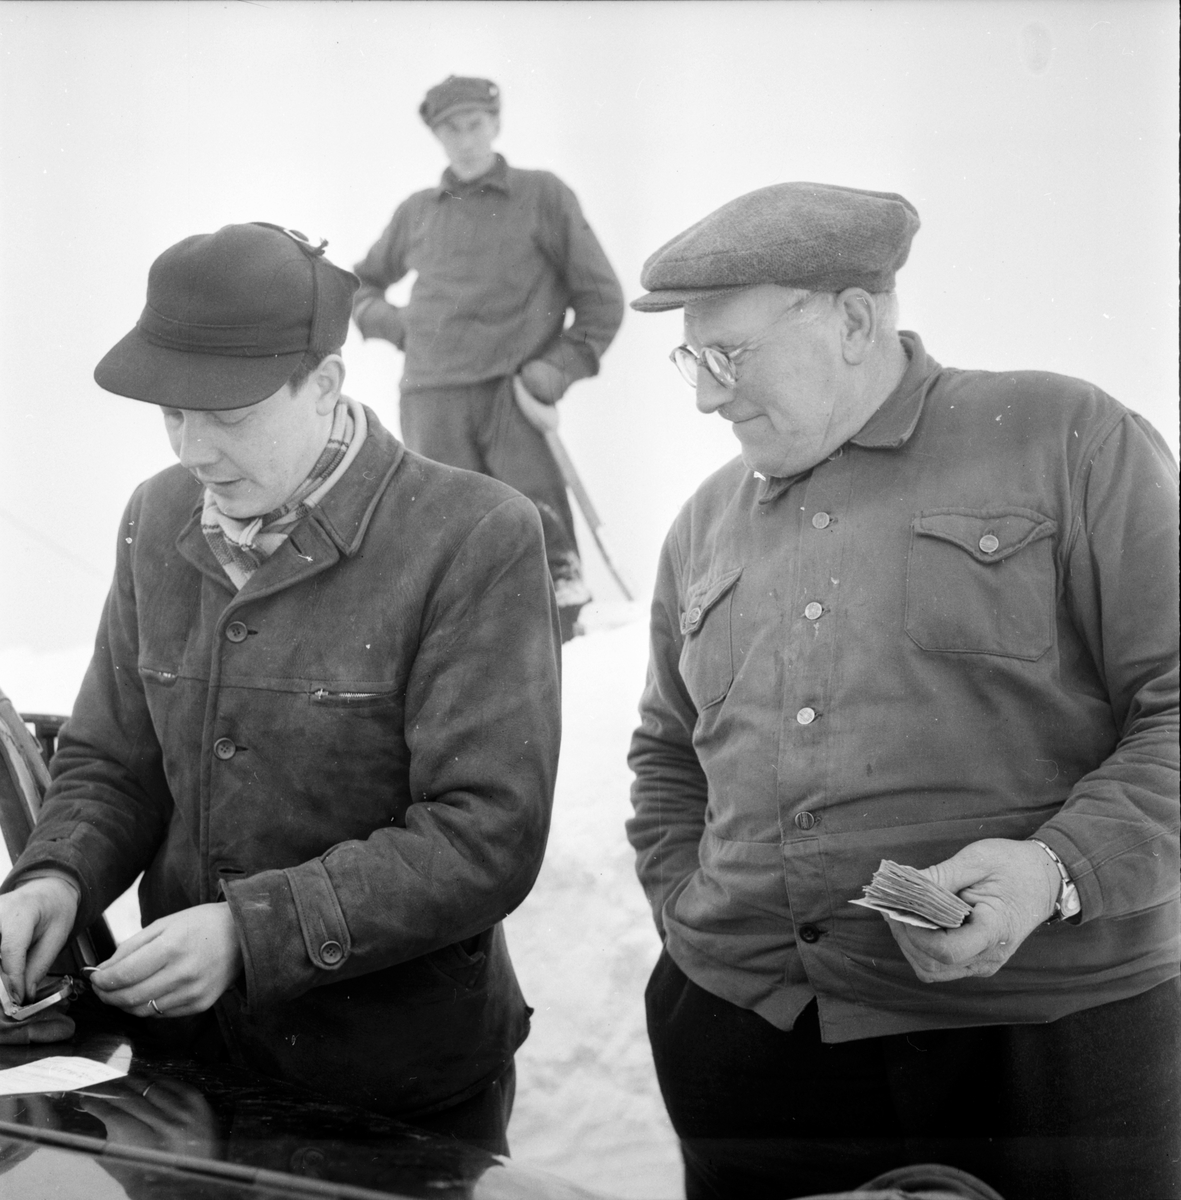 Lingbo,
Lantbrevbärare E. Wallinder,
Februari 1956